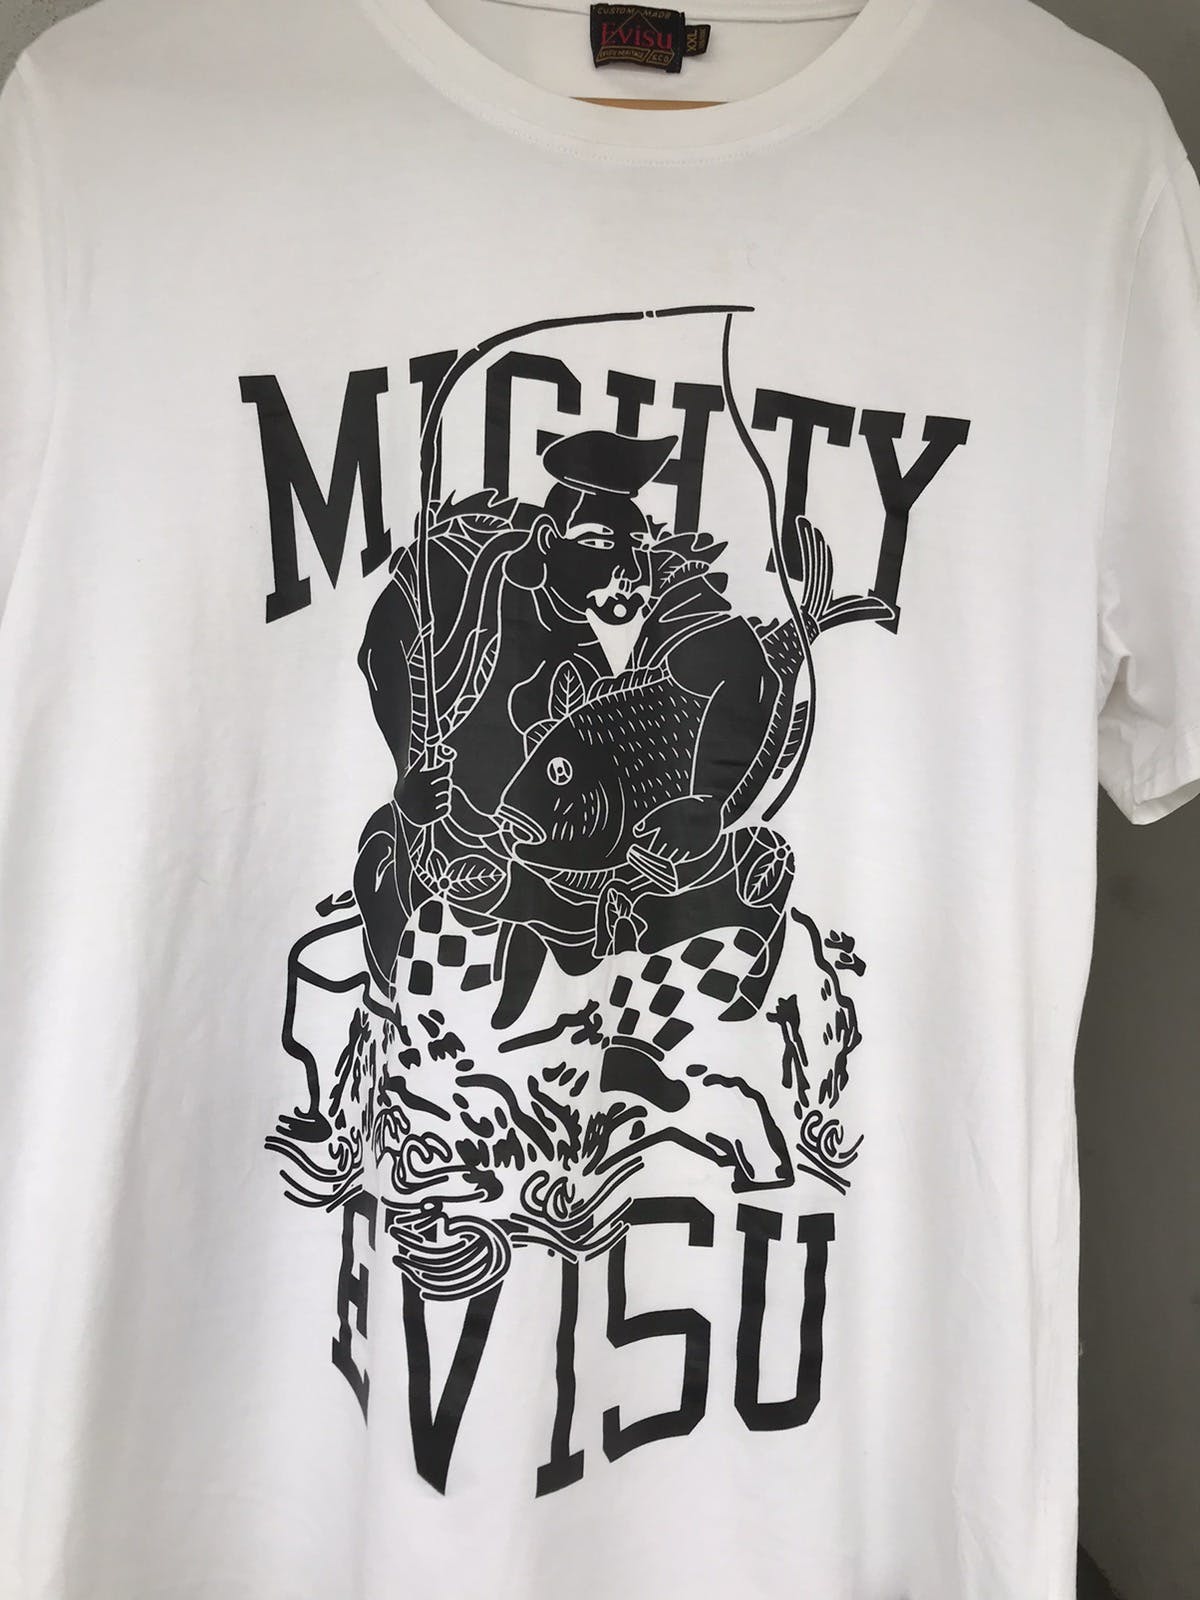 Mighty Evisu White tee - 5